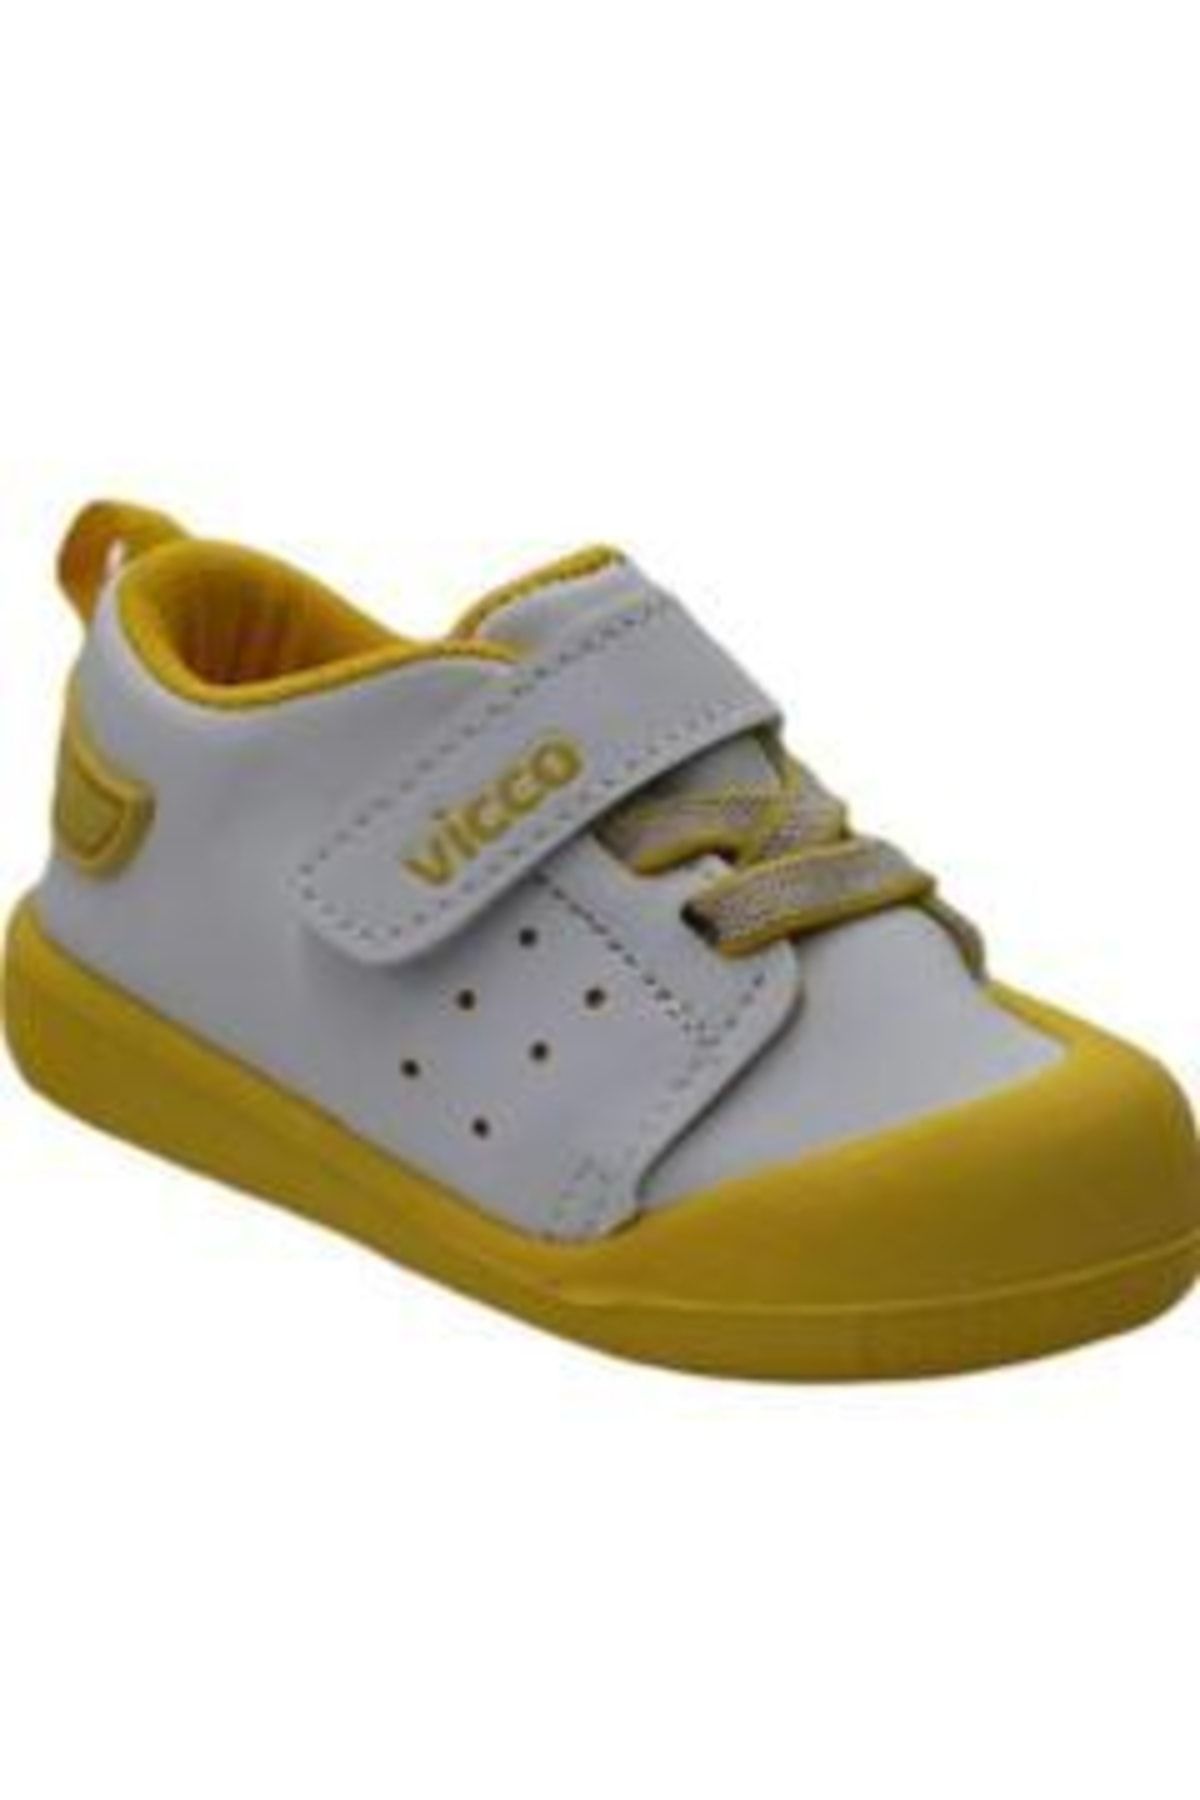 Vicco 950,e23y,211 Oli Çocuk Ayakkabısı Sarı Sarı Sarı